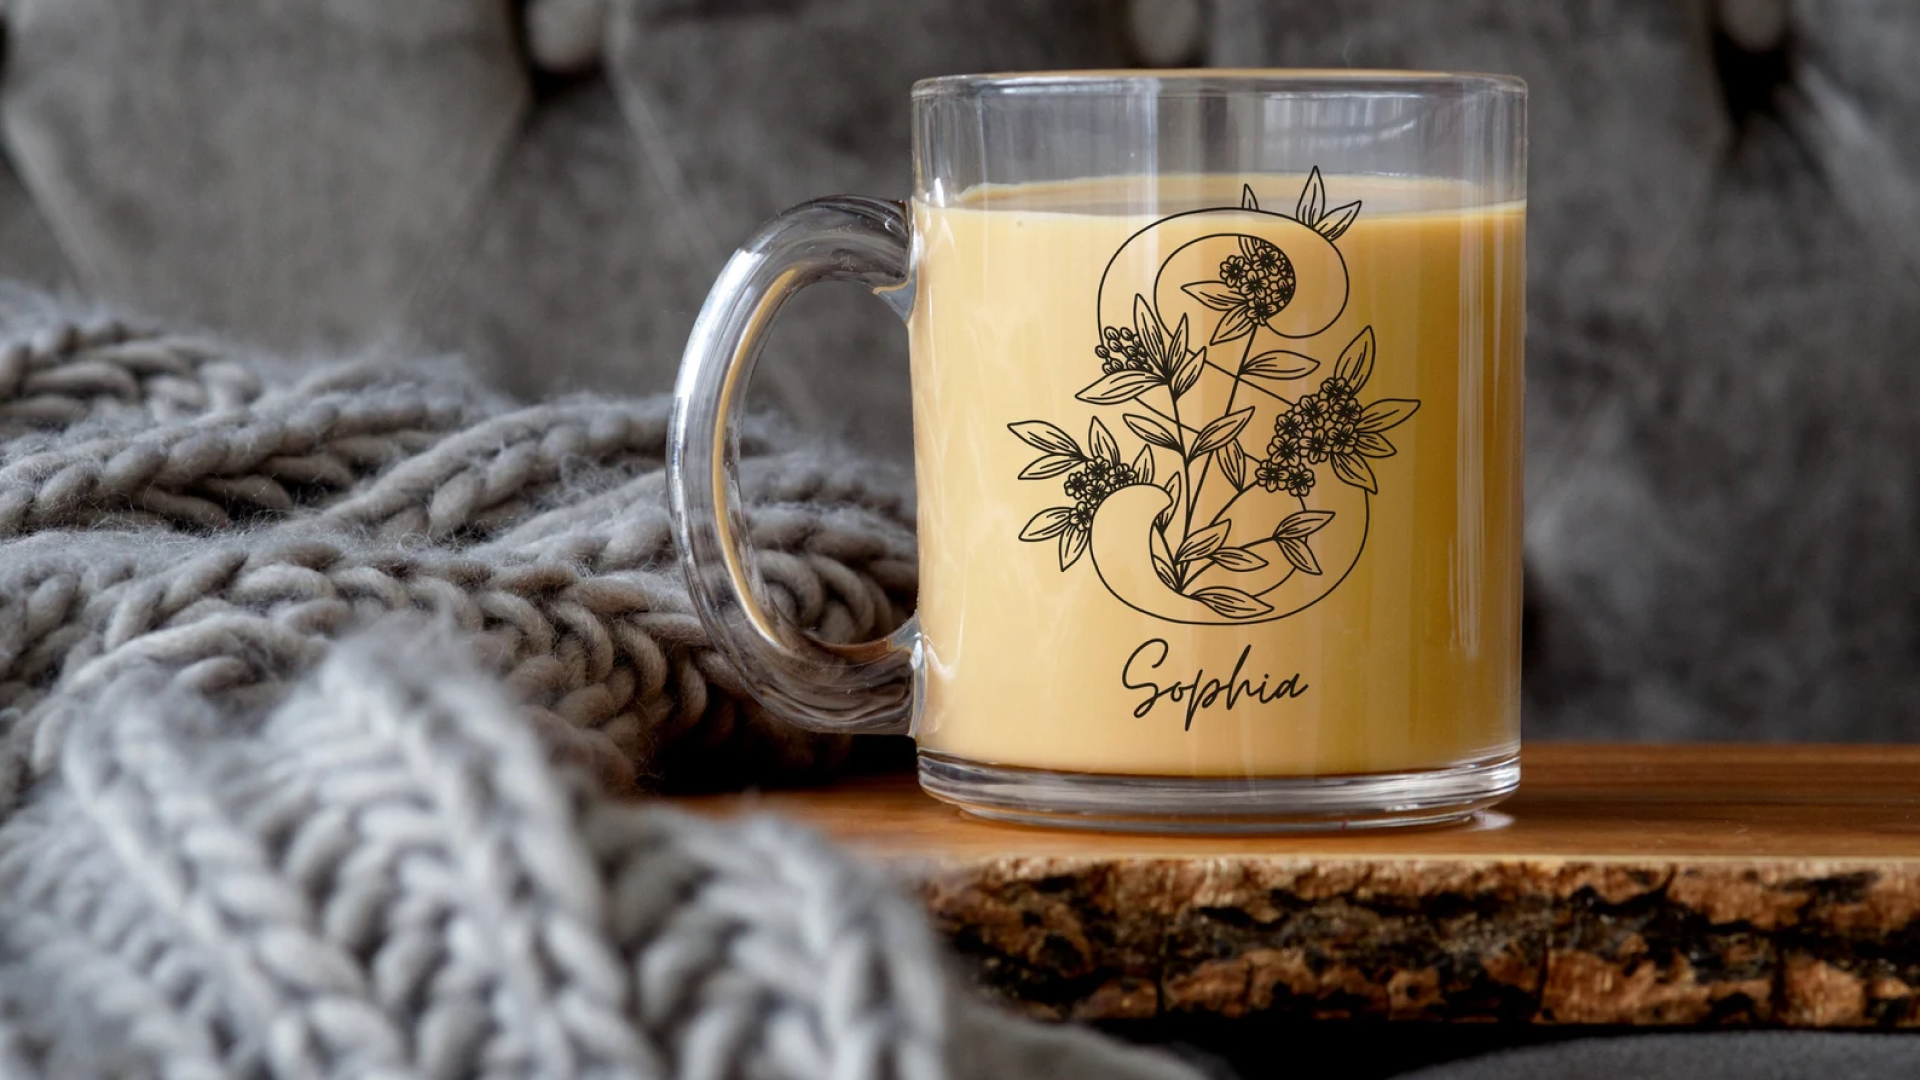 Stay Warm White Coffee Mug,fun Coffee Mug 